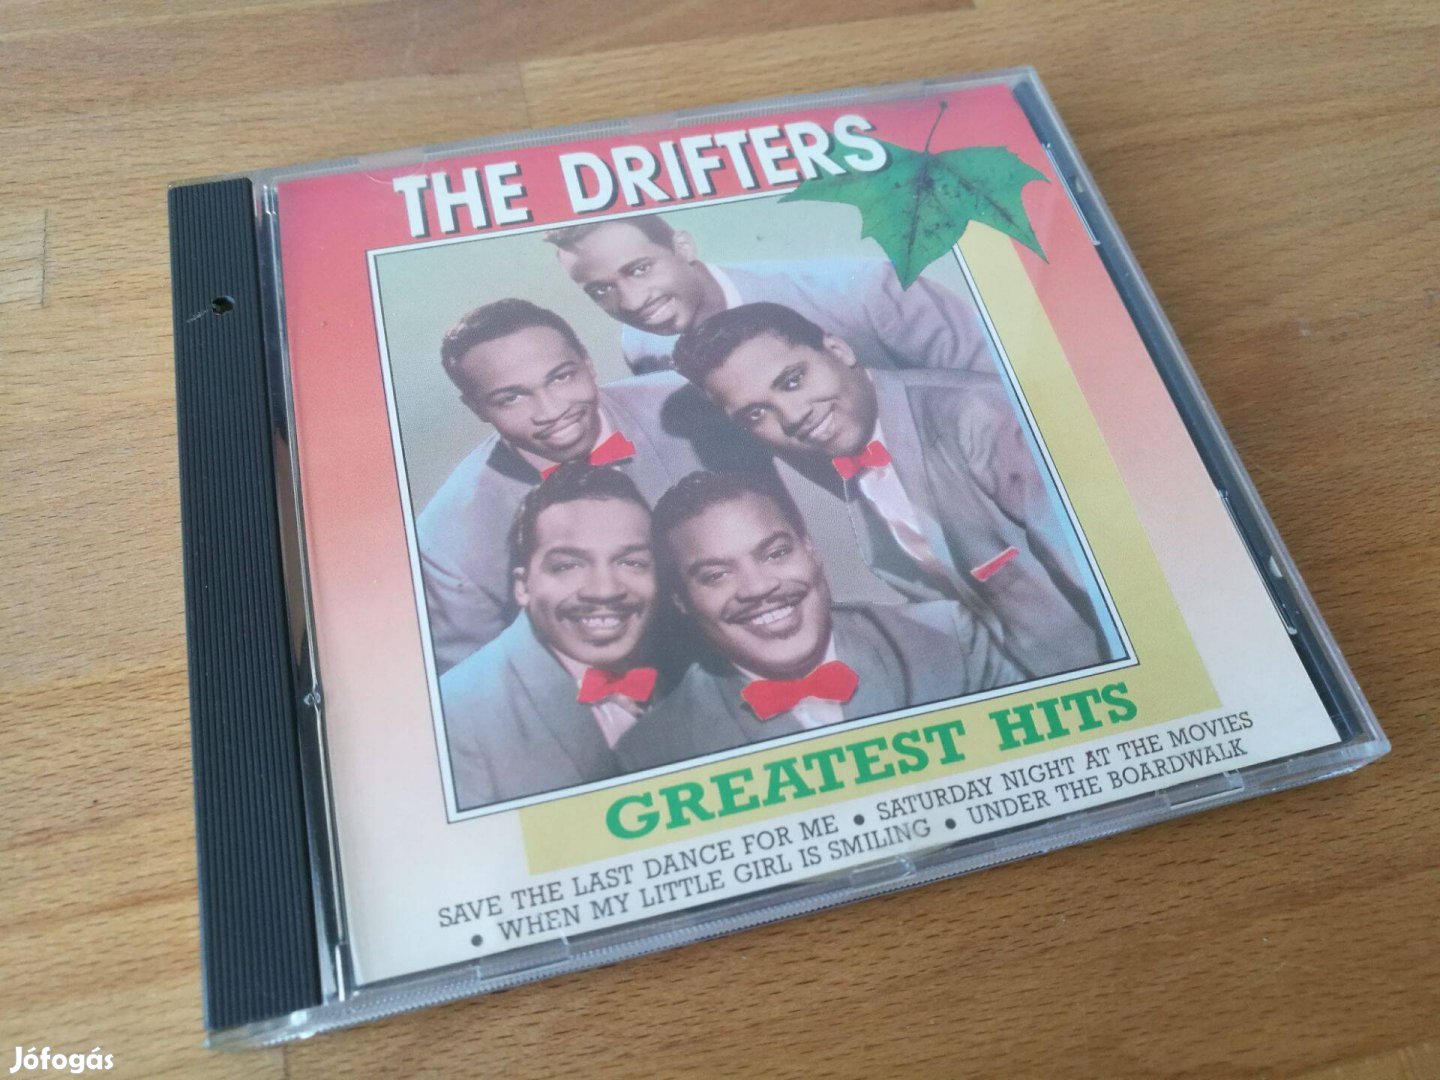 The Drifters - Greatest hits (Evergreen, Korea, CD)